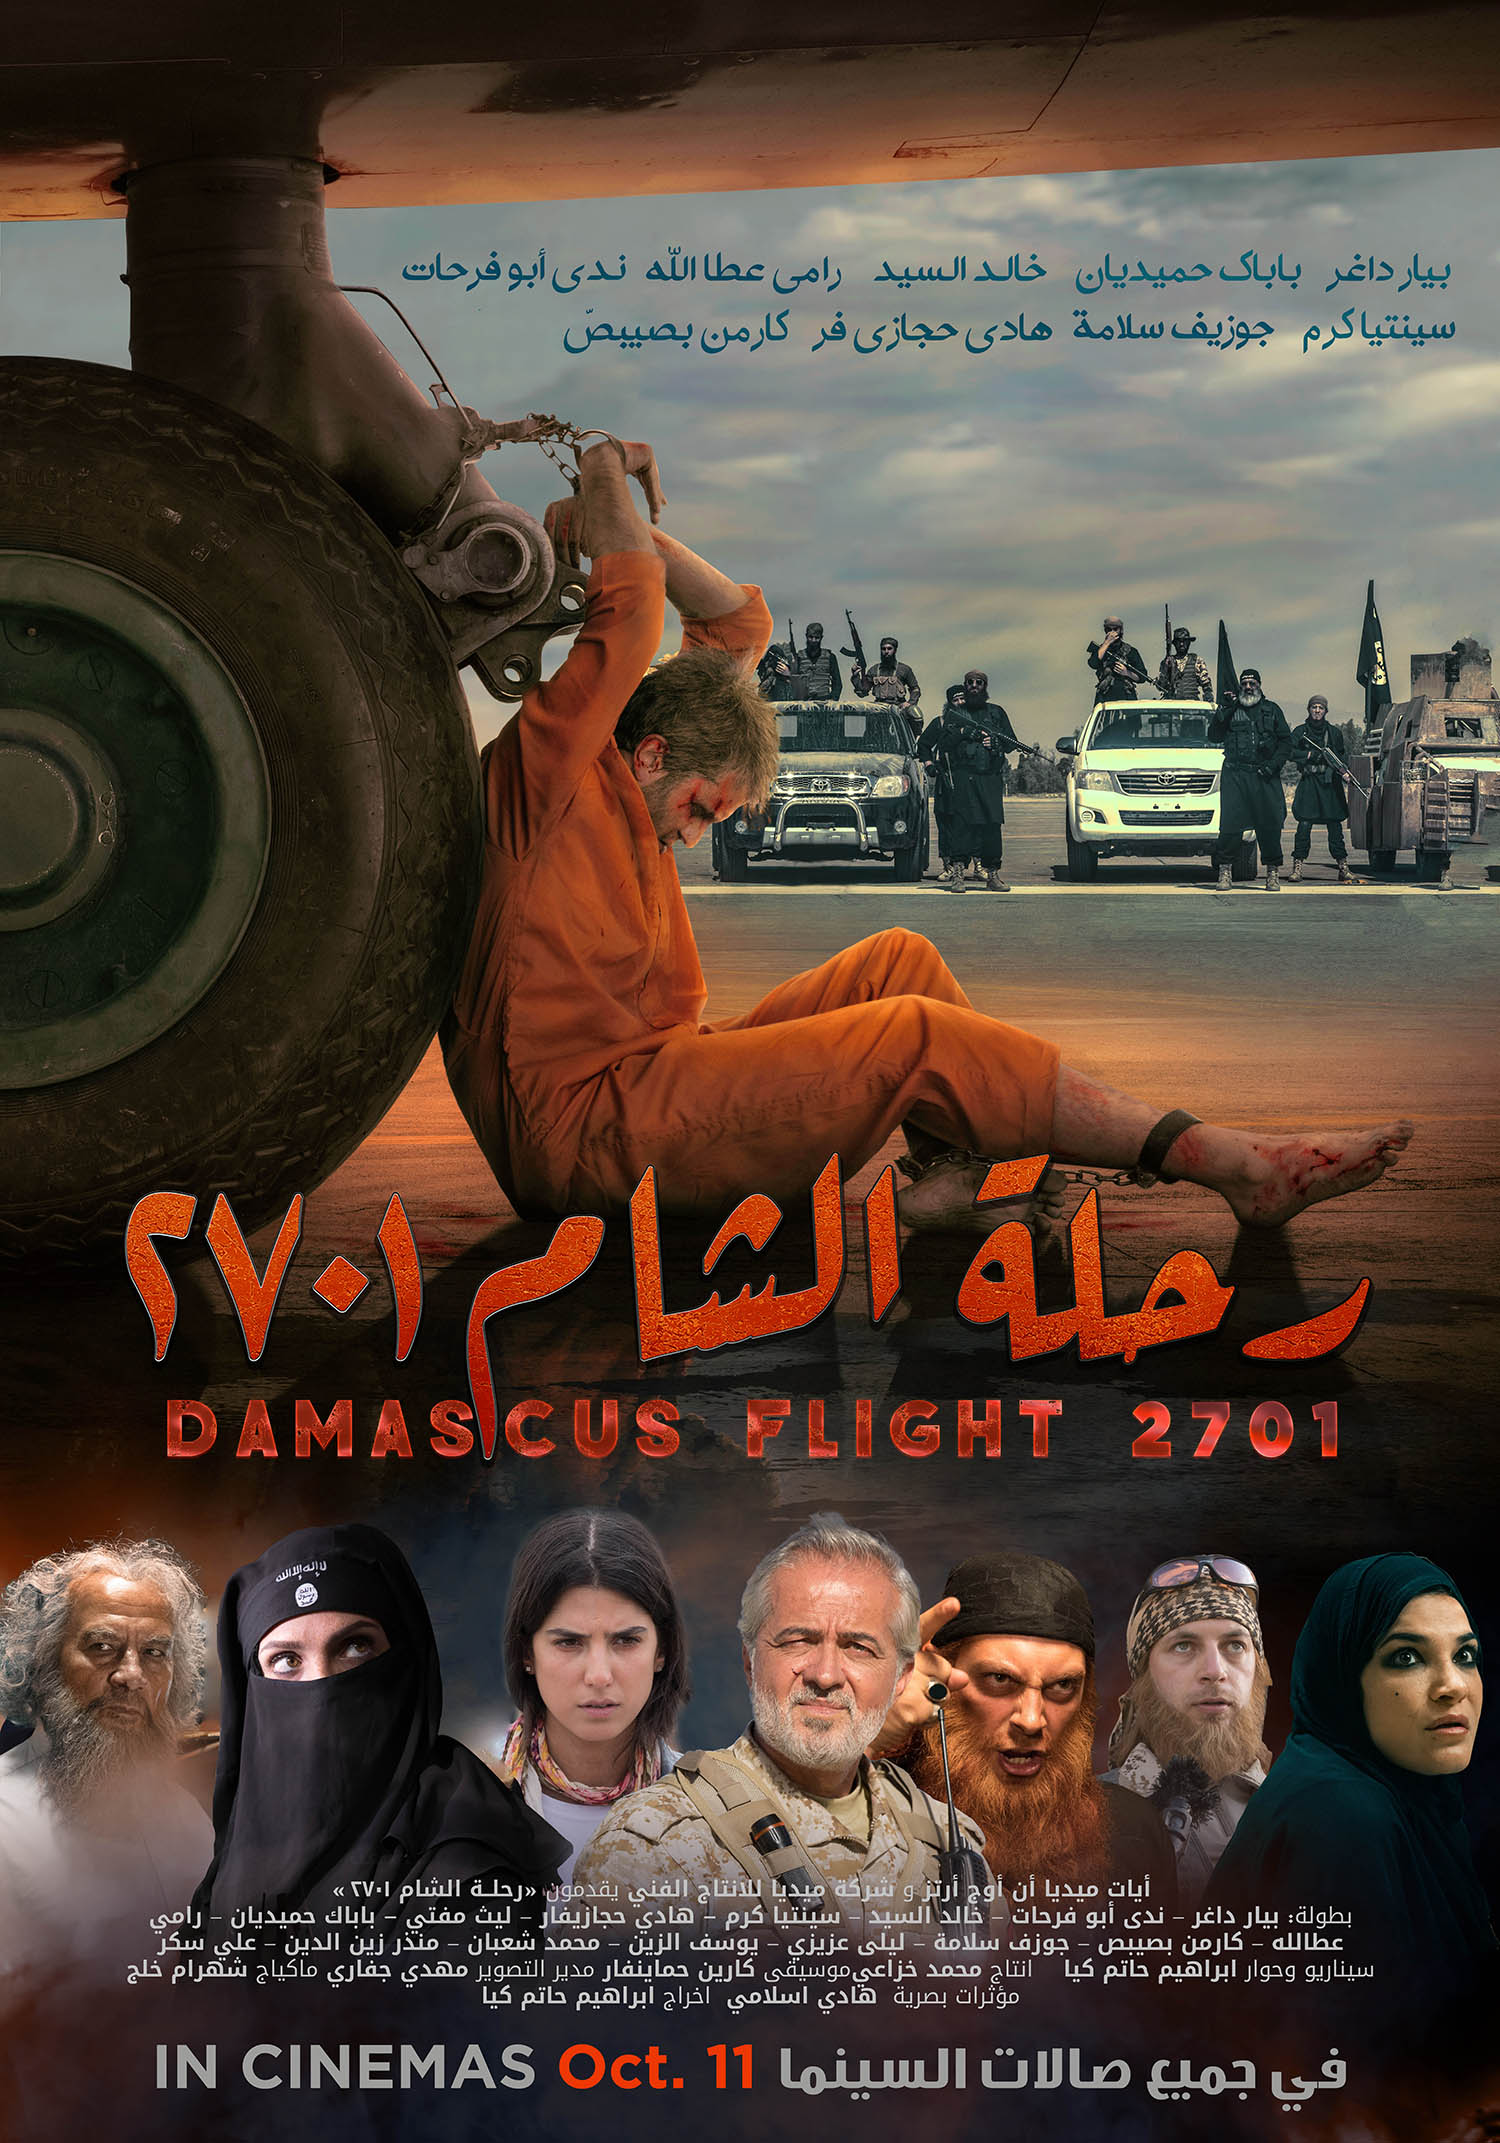 Moviegoers Me Damascus Flight 2701 رحلة الشام 2701 Babak